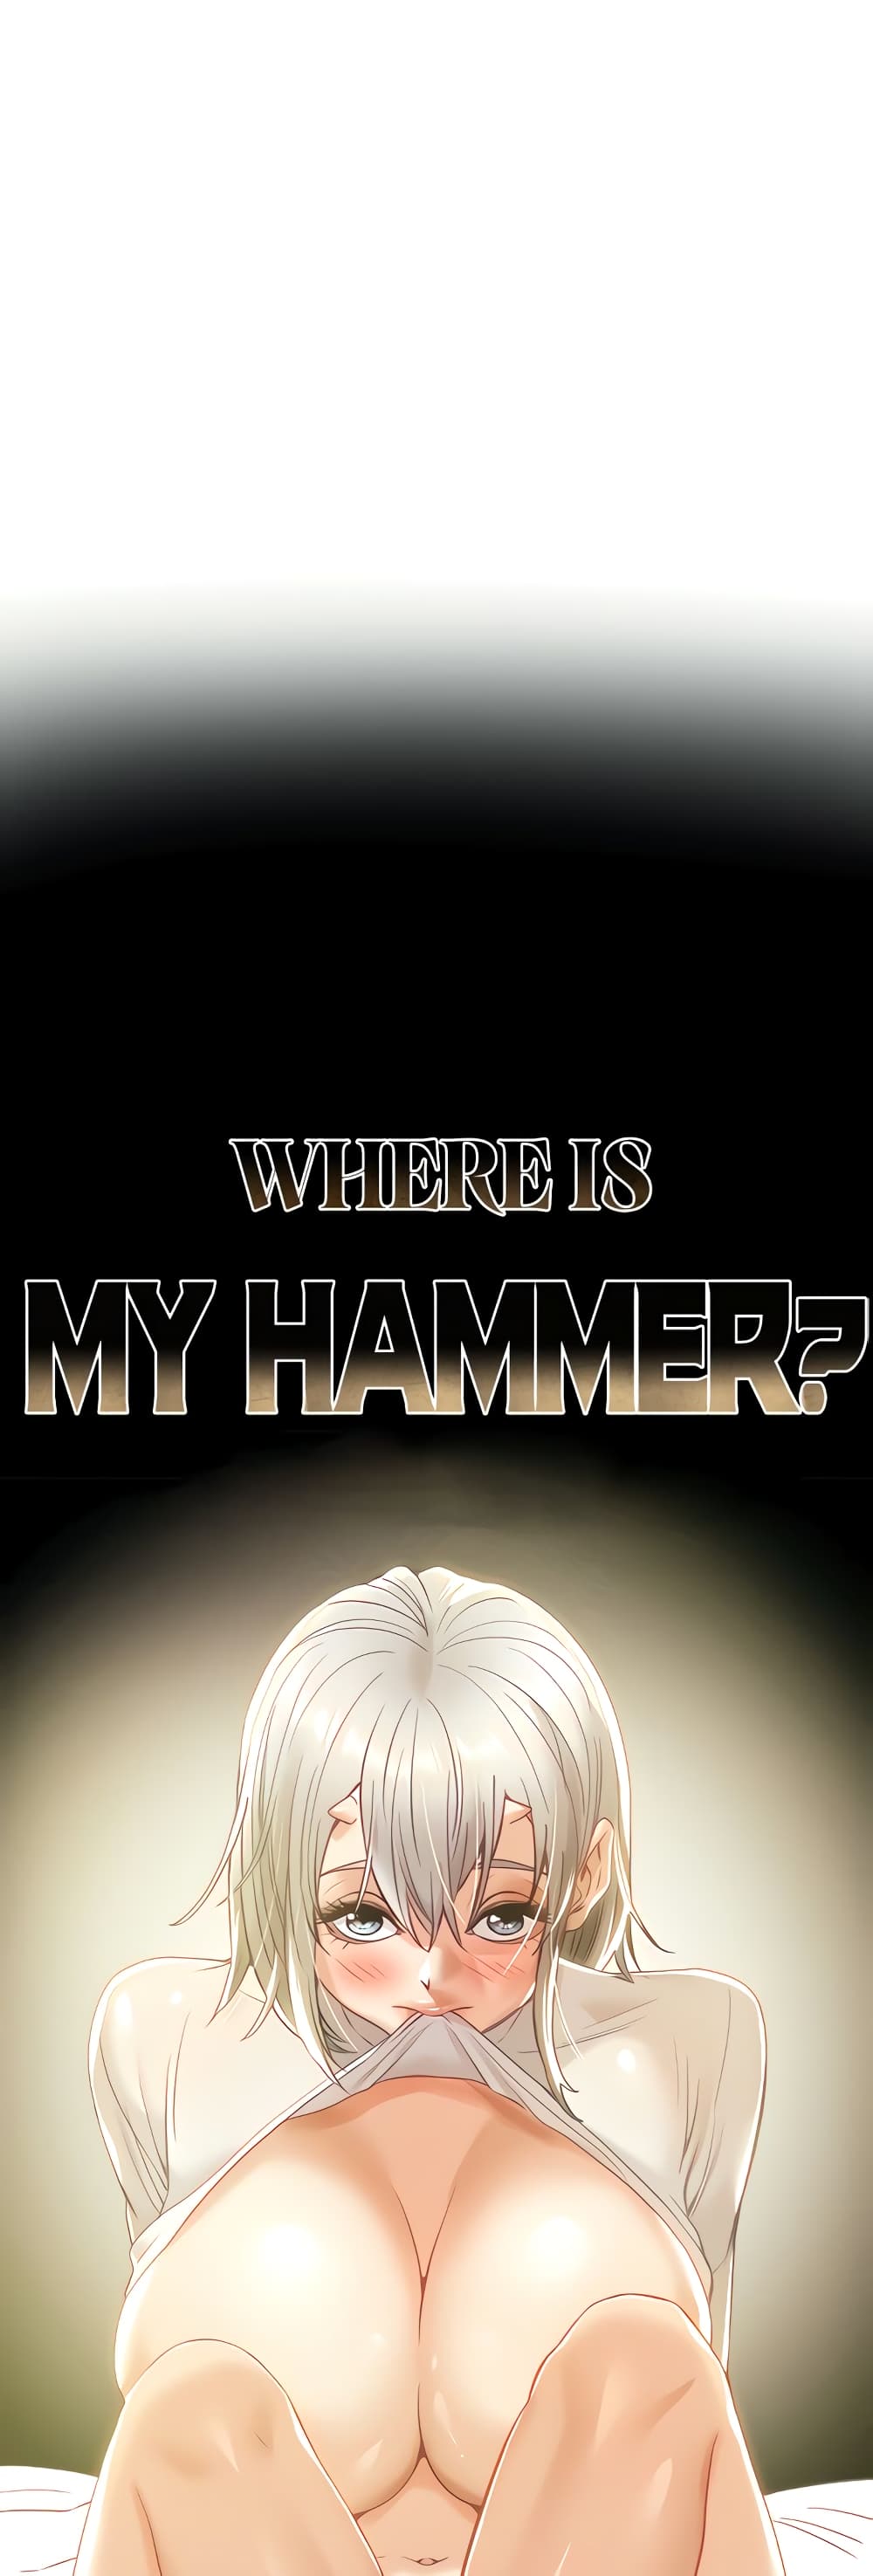 Where Did My Hammer Go? 40-40